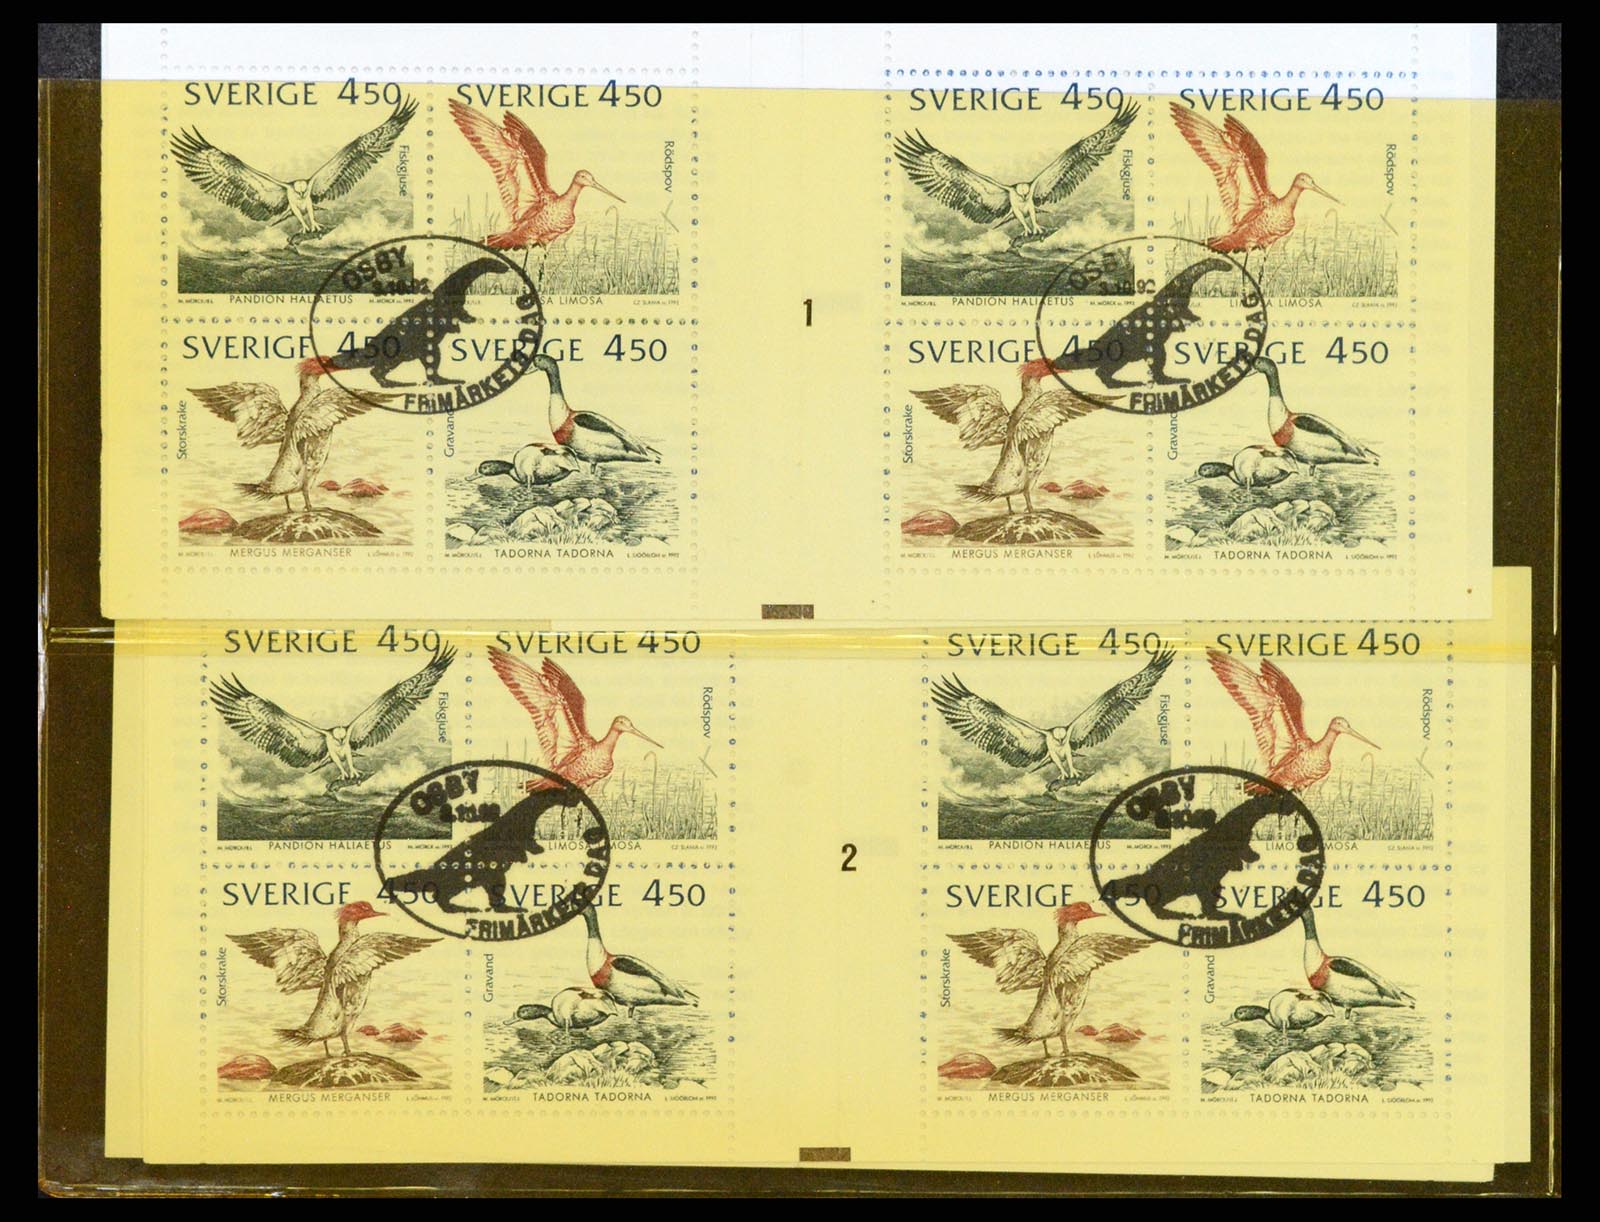 37341 010 - Stamp collection 37341 Sweden stamp booklets.